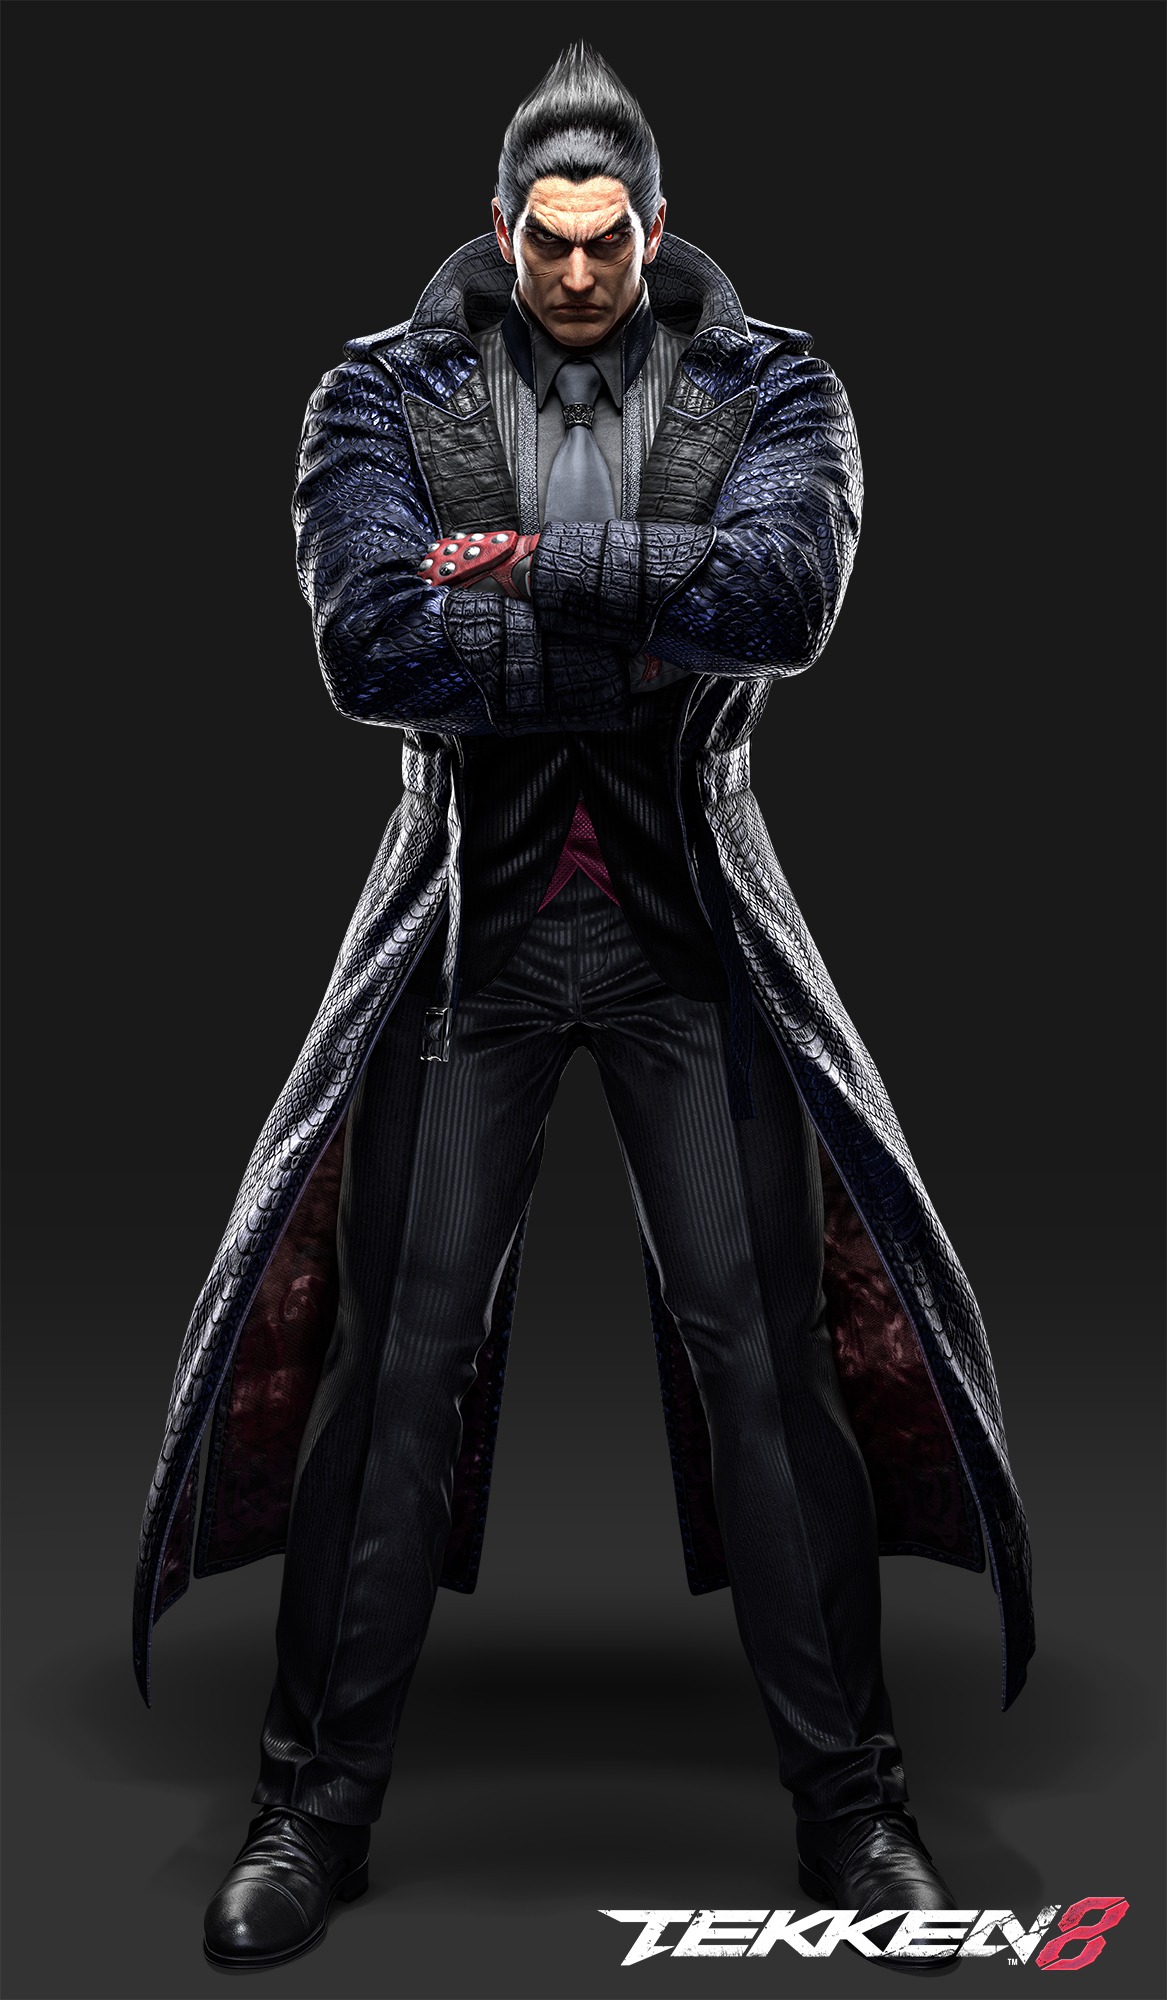 Official character render of Kazuya